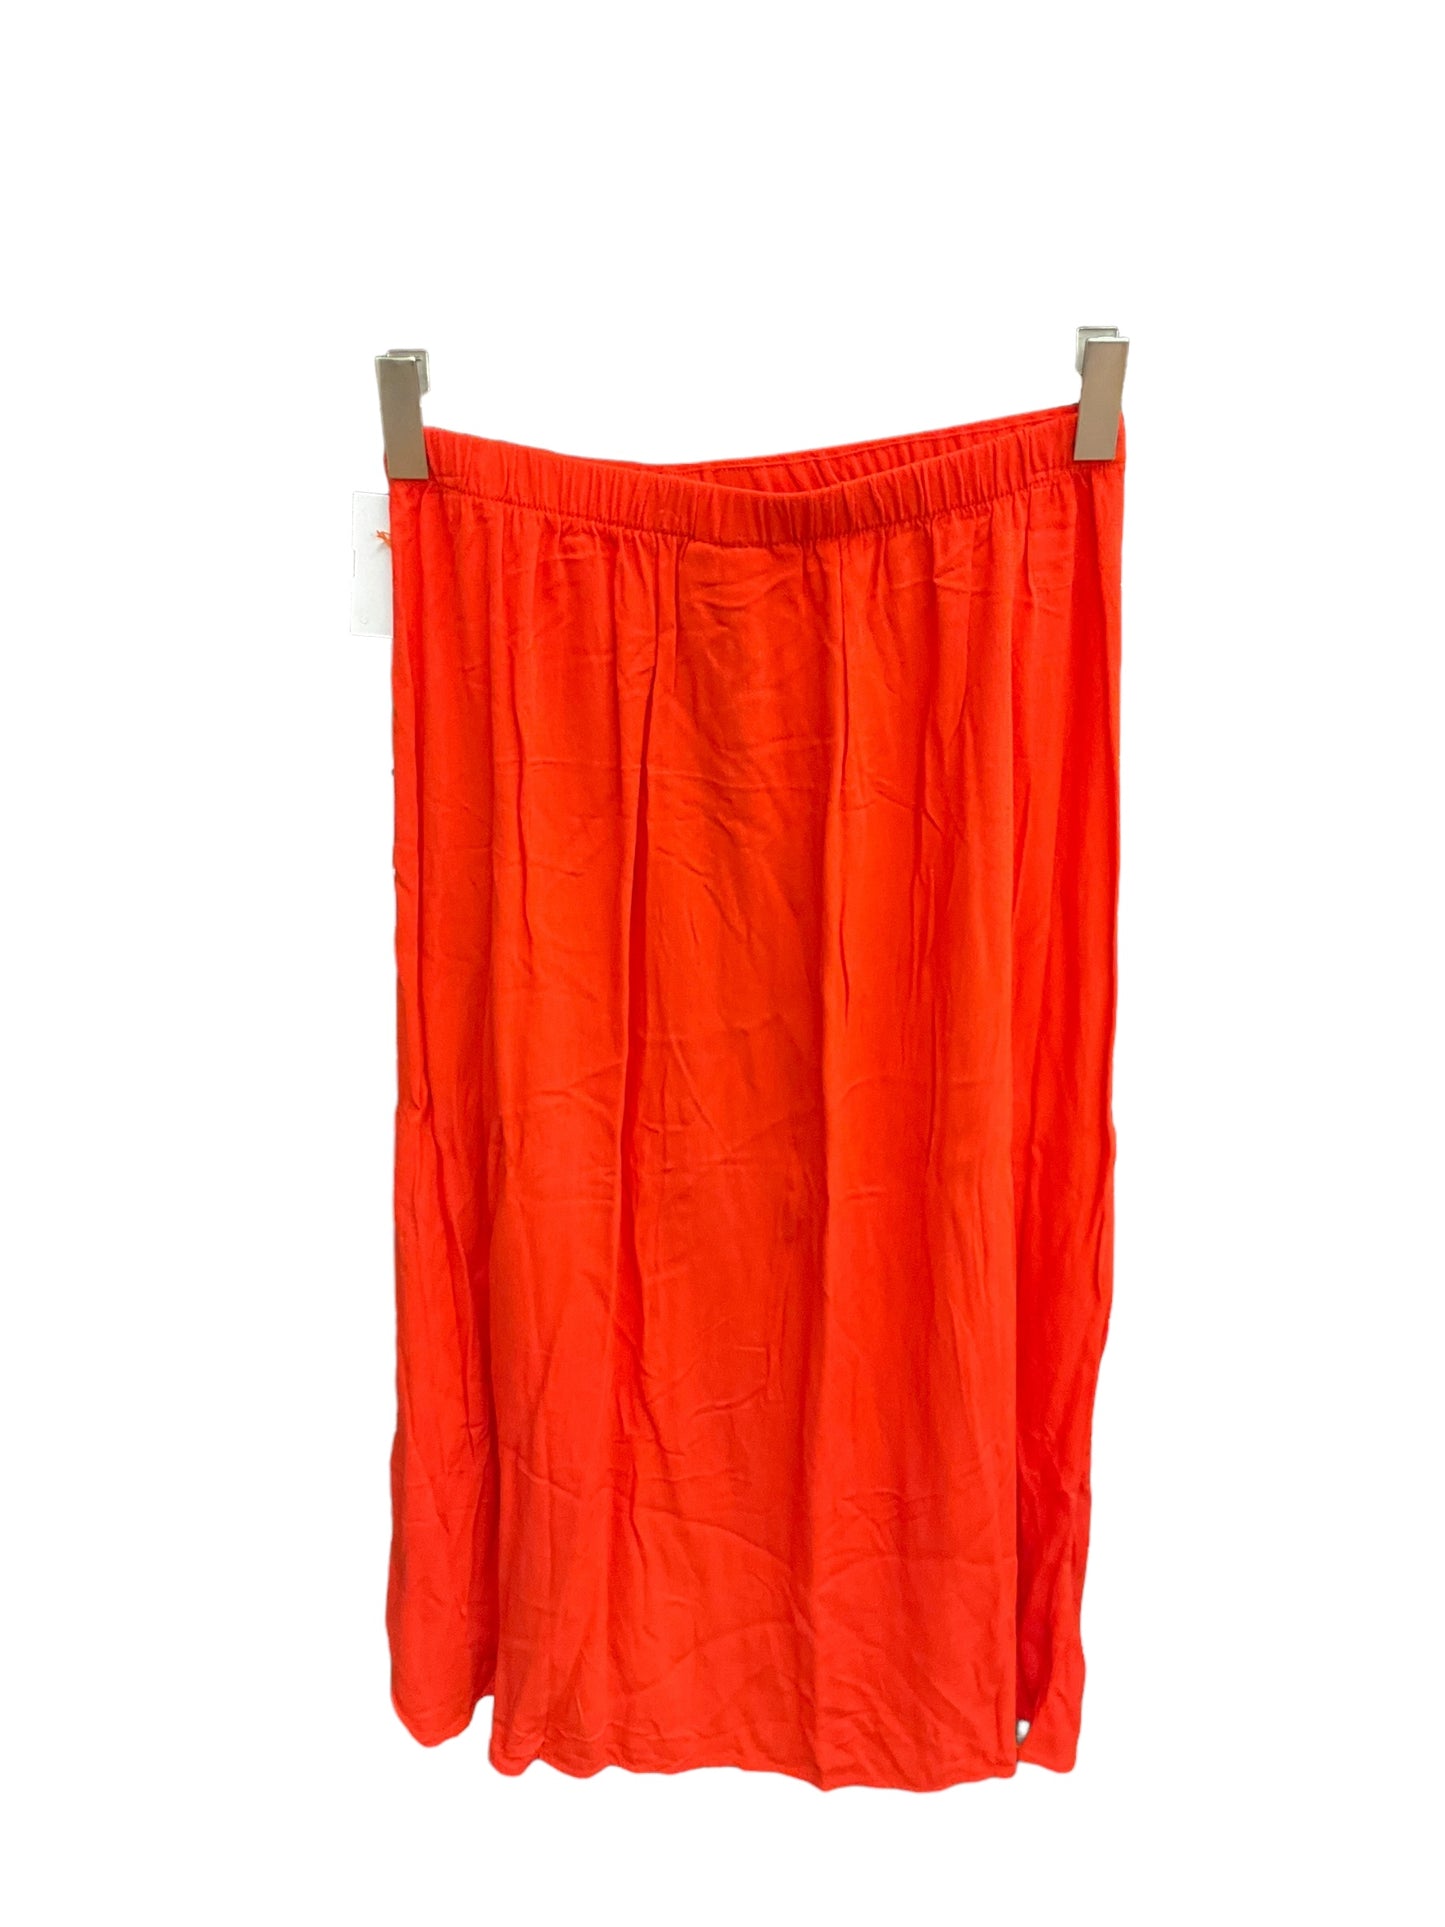 Orange Skirt Midi Knox Rose, Size Xs